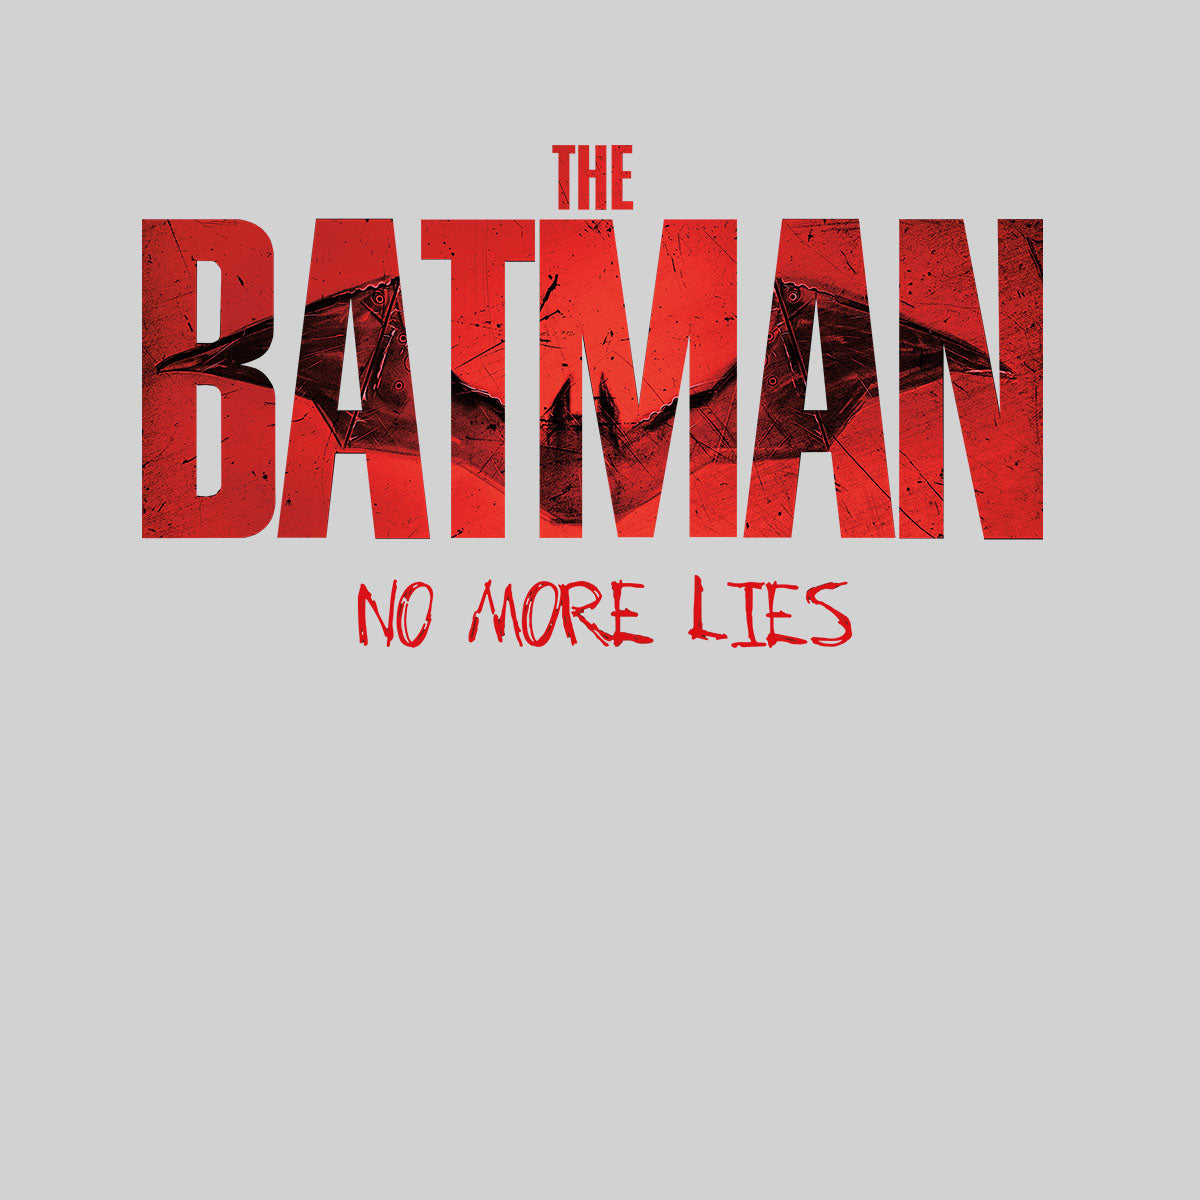 The Batman No More Lies Logo Movie T-shirt Batmobile Joker Riddler - Kuzi Tees